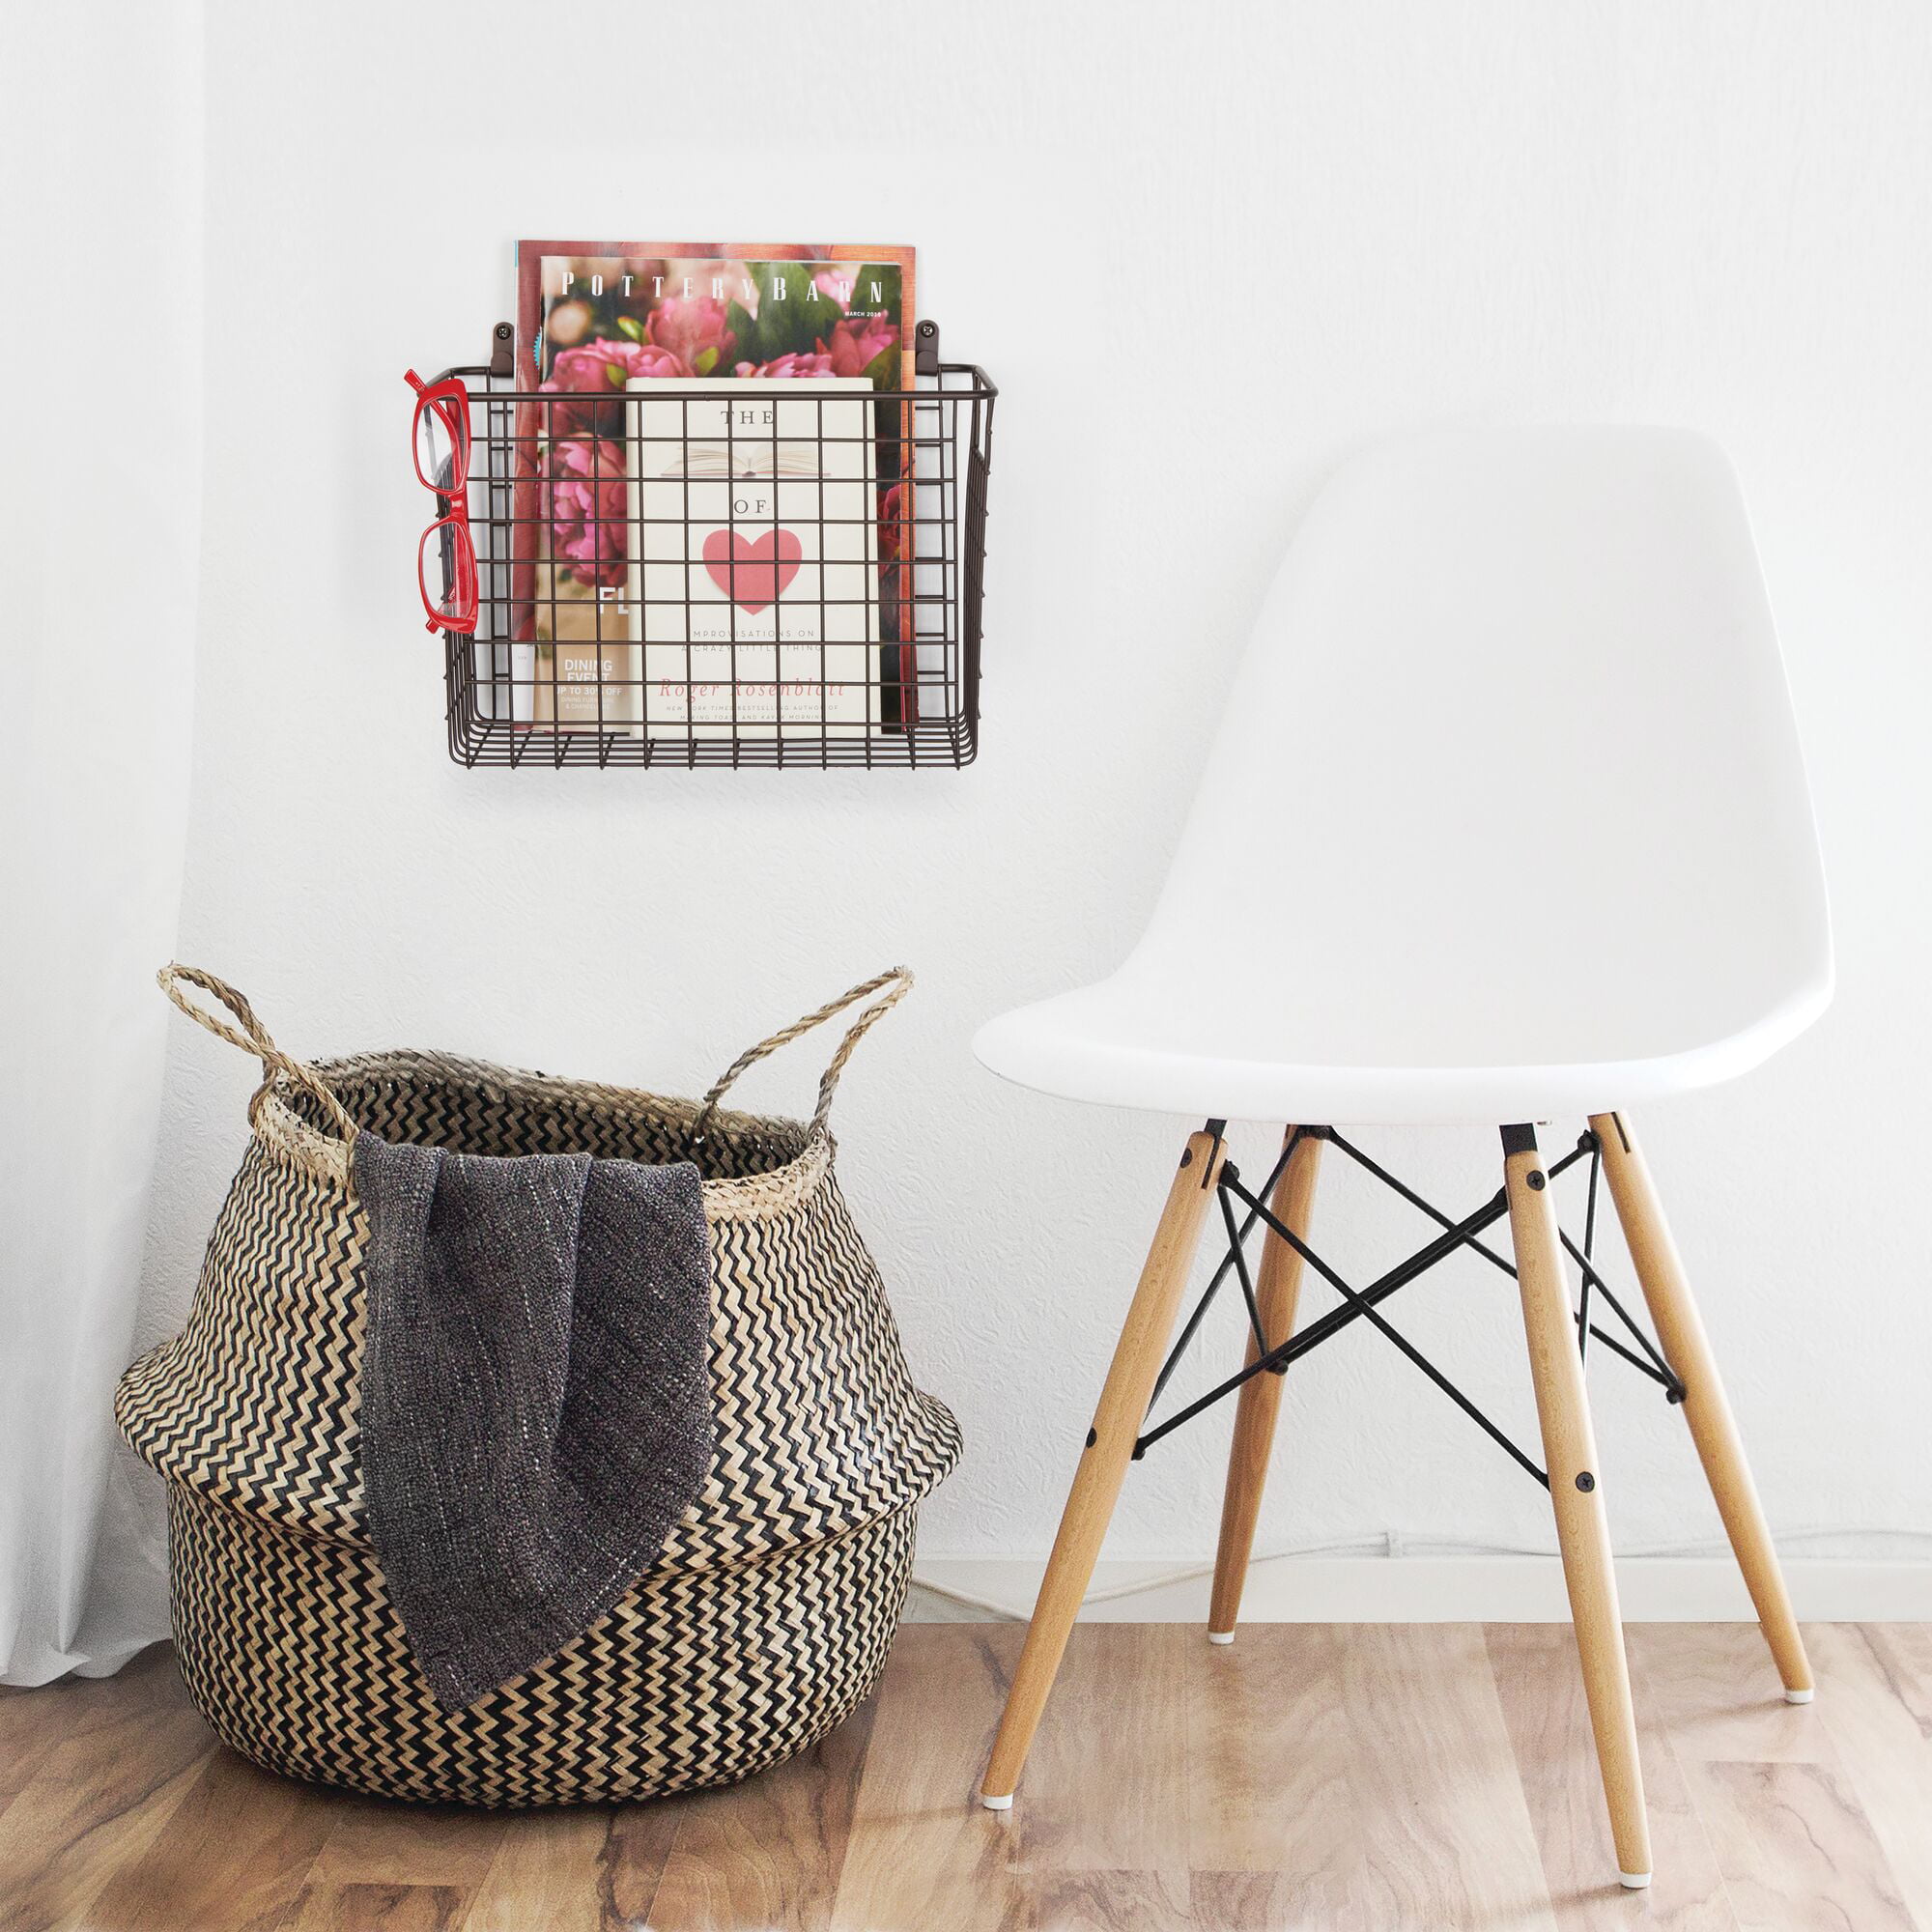 Multi-Purpose Organiser Tray for Household Items Bronze Large Wall-Mounted Metal Wire Basket mDesign Hanging Storage Basket 